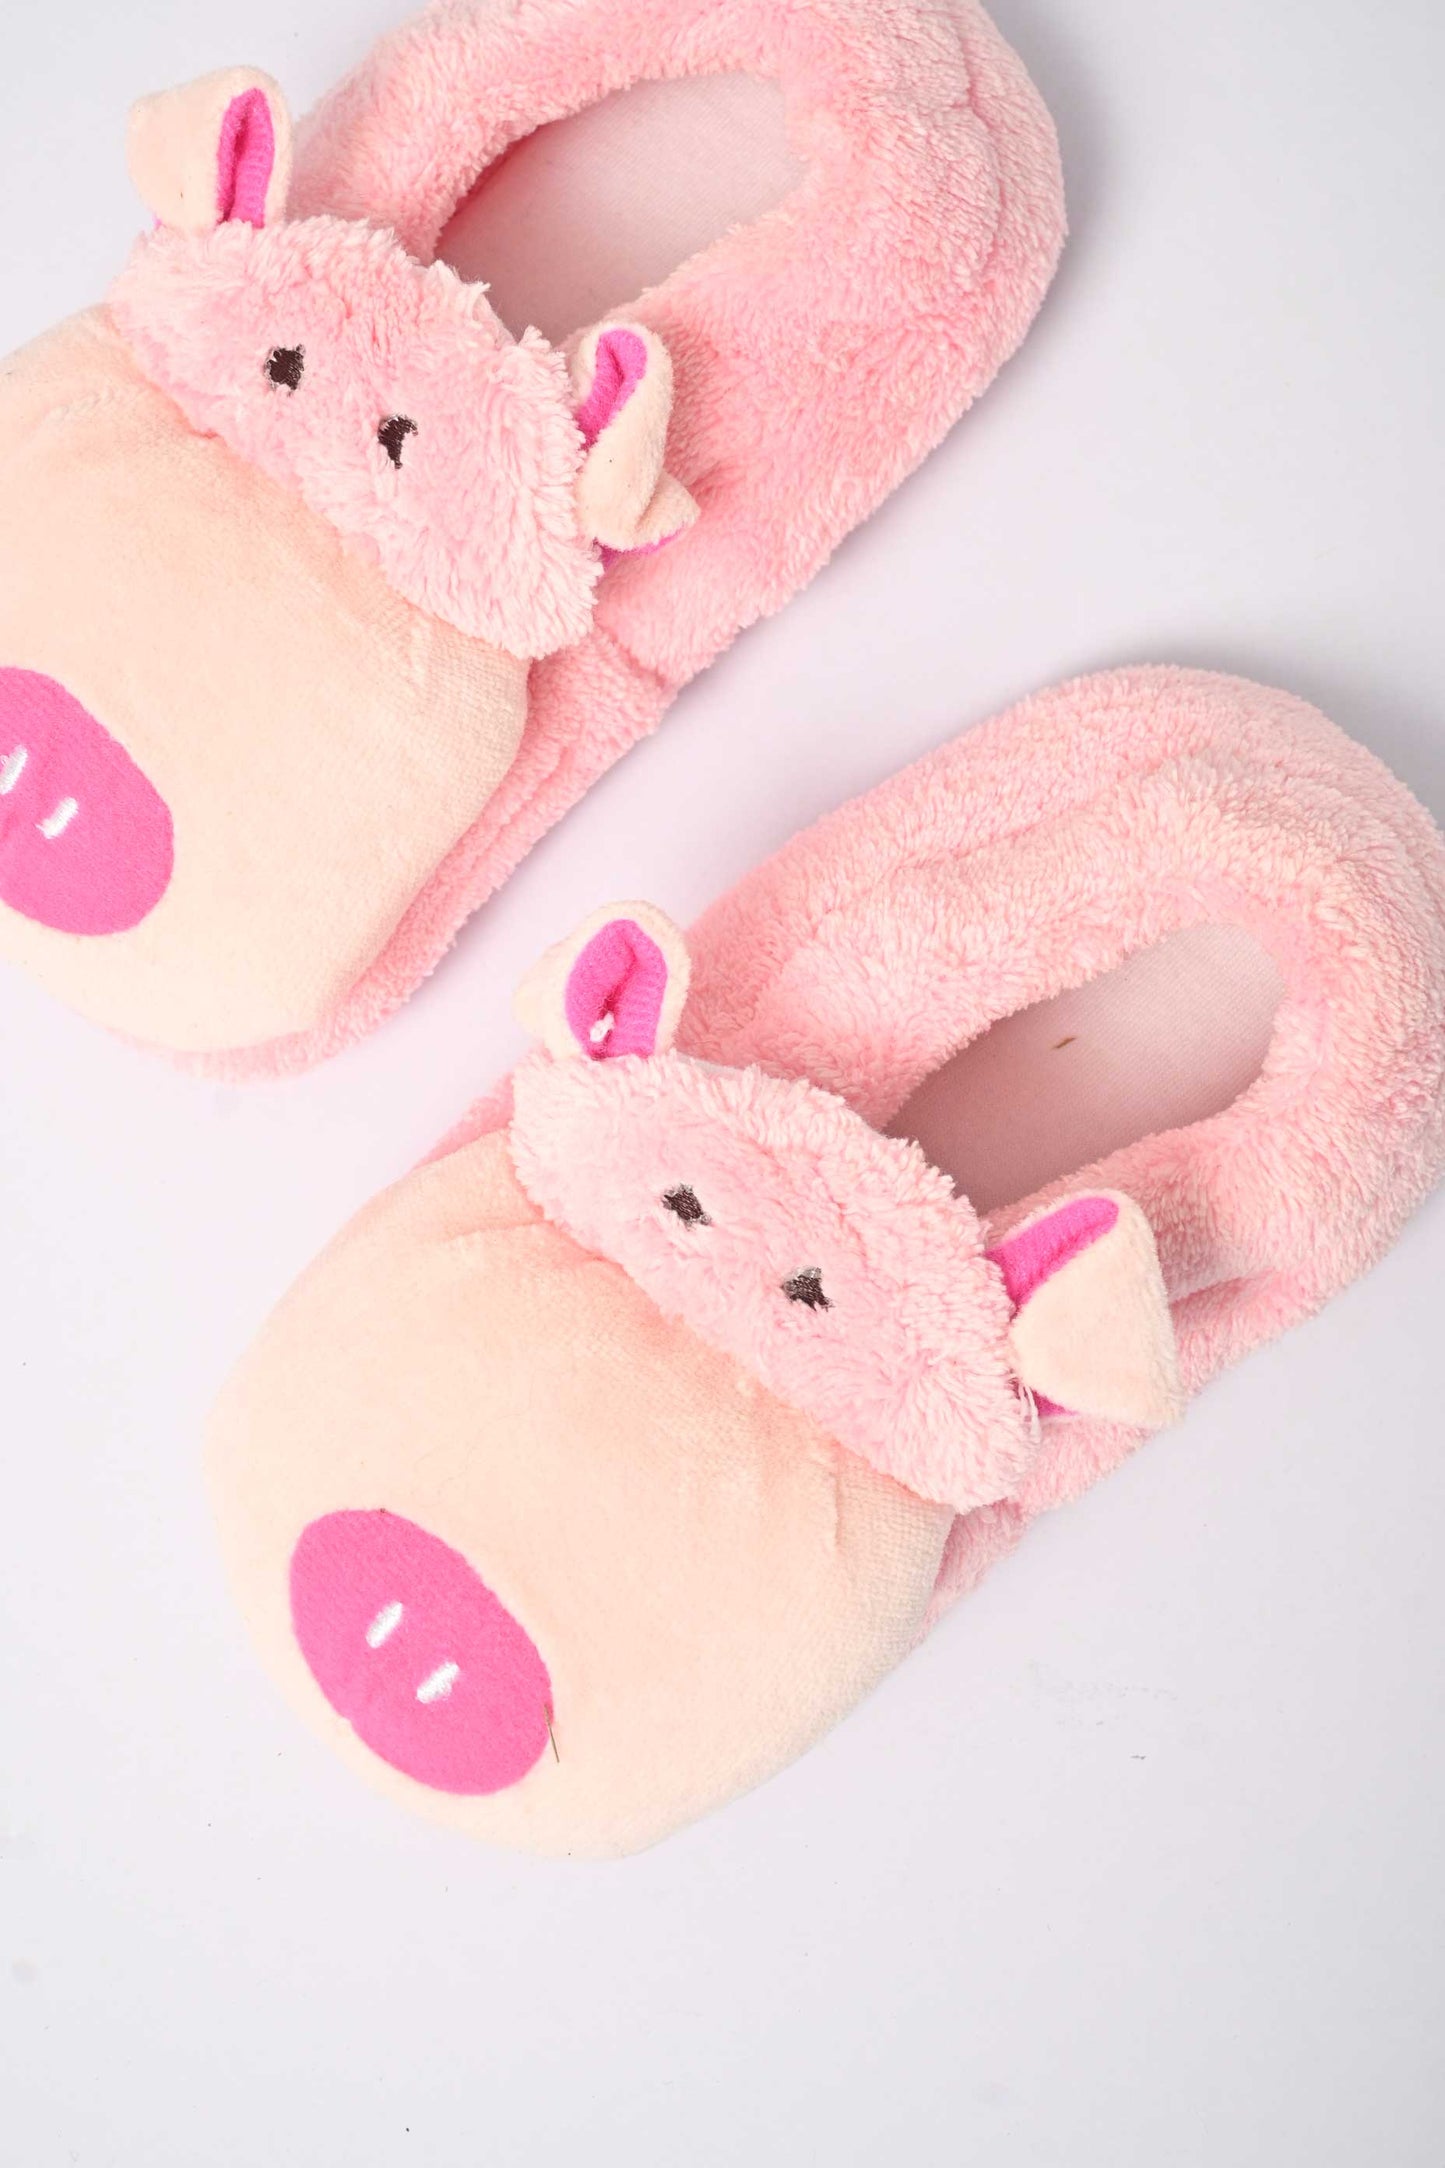 DARA Baby Newborn Warmth Cute Shoes